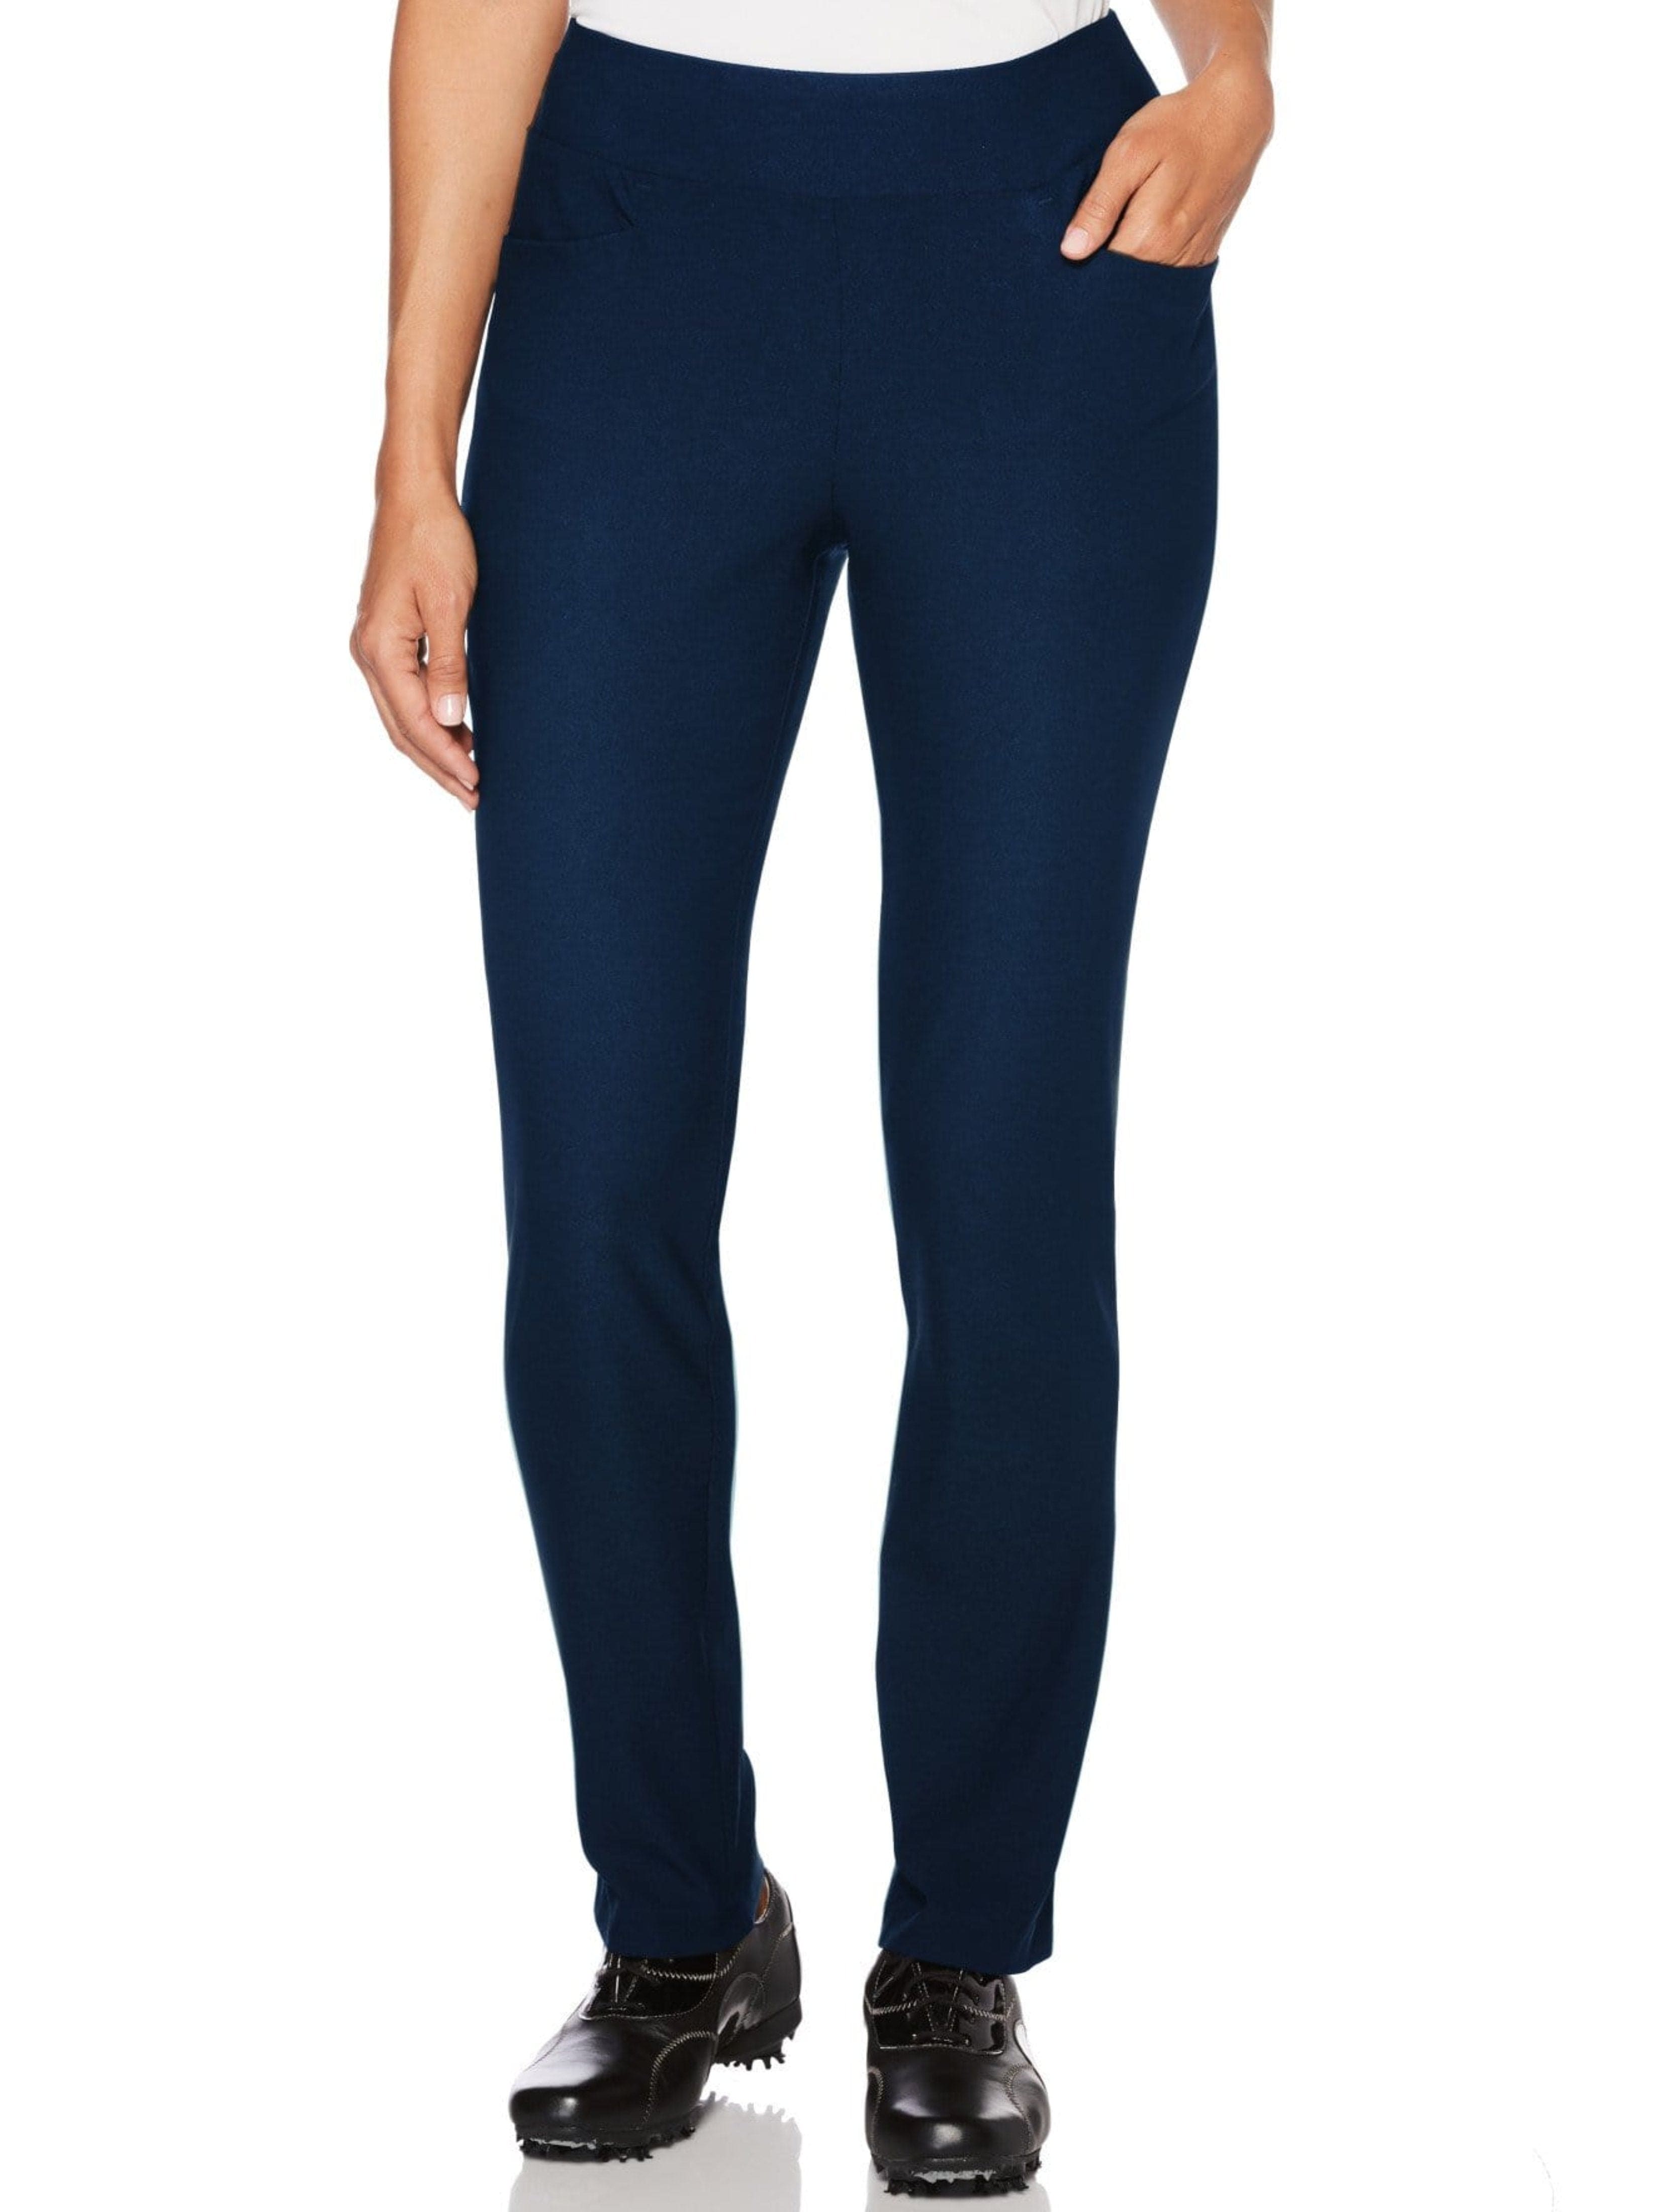 Brilliant Women's Pants Plus Size Cleanrance Fashionable Slim Fitting  Casual Color Pants clearance clothes under $25.00